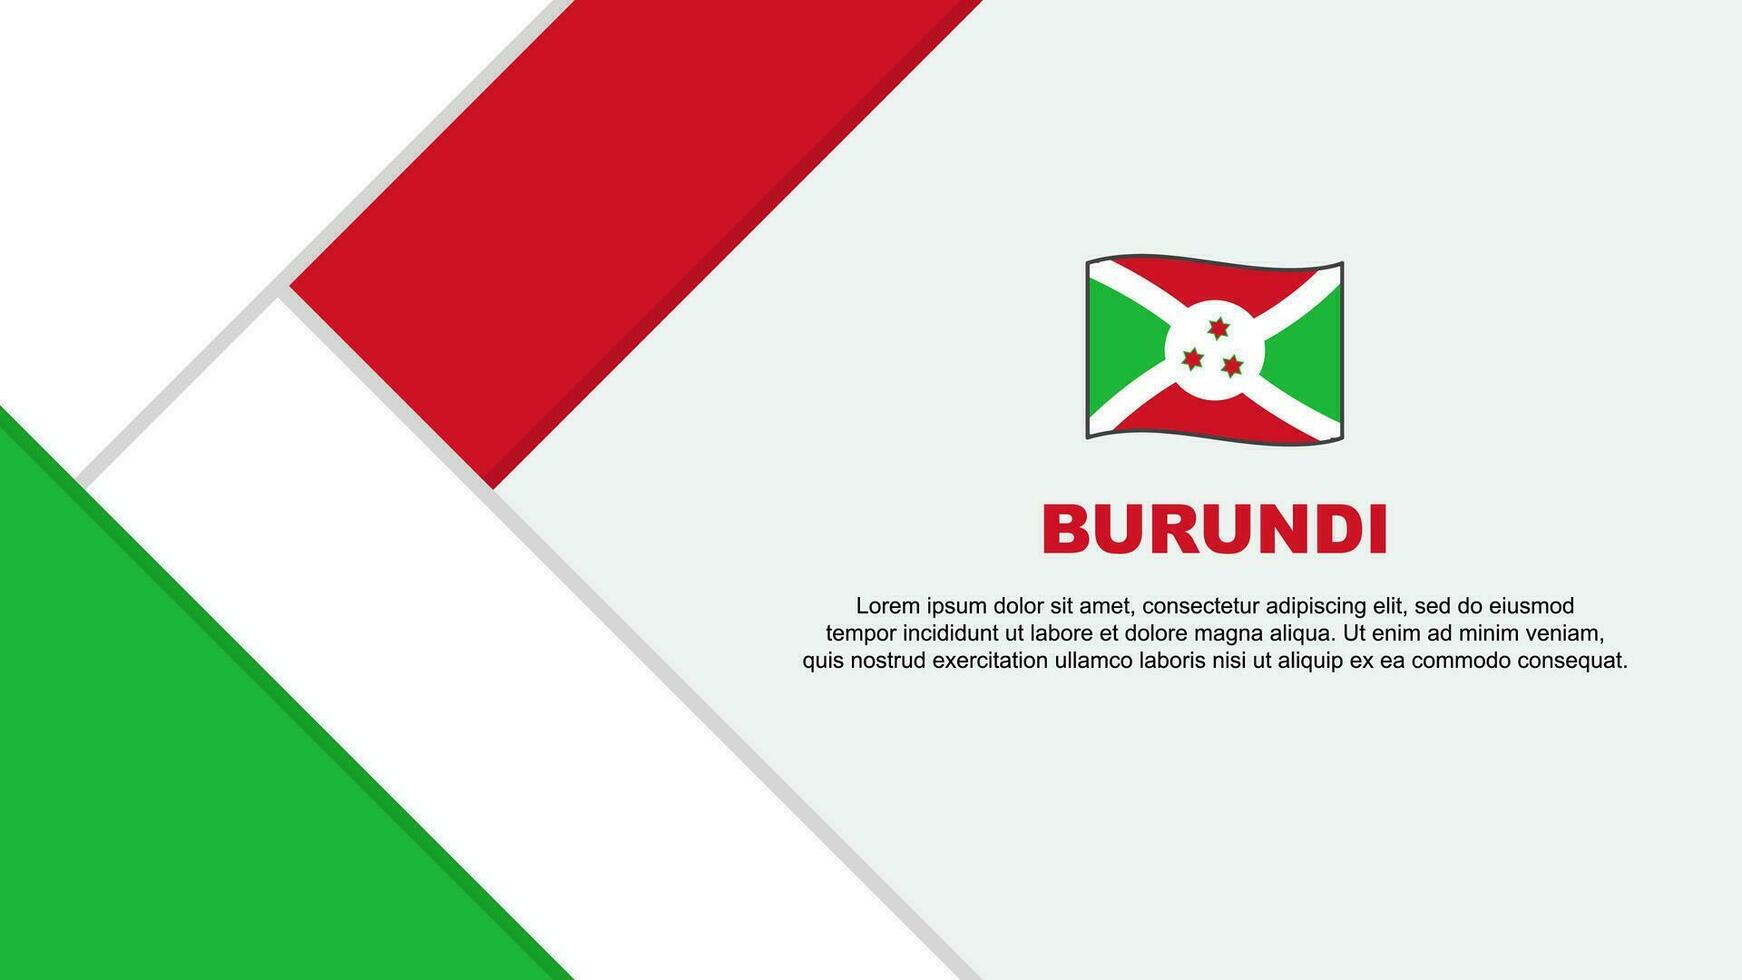 Burundi Flag Abstract Background Design Template. Burundi Independence Day Banner Cartoon Vector Illustration. Burundi Illustration